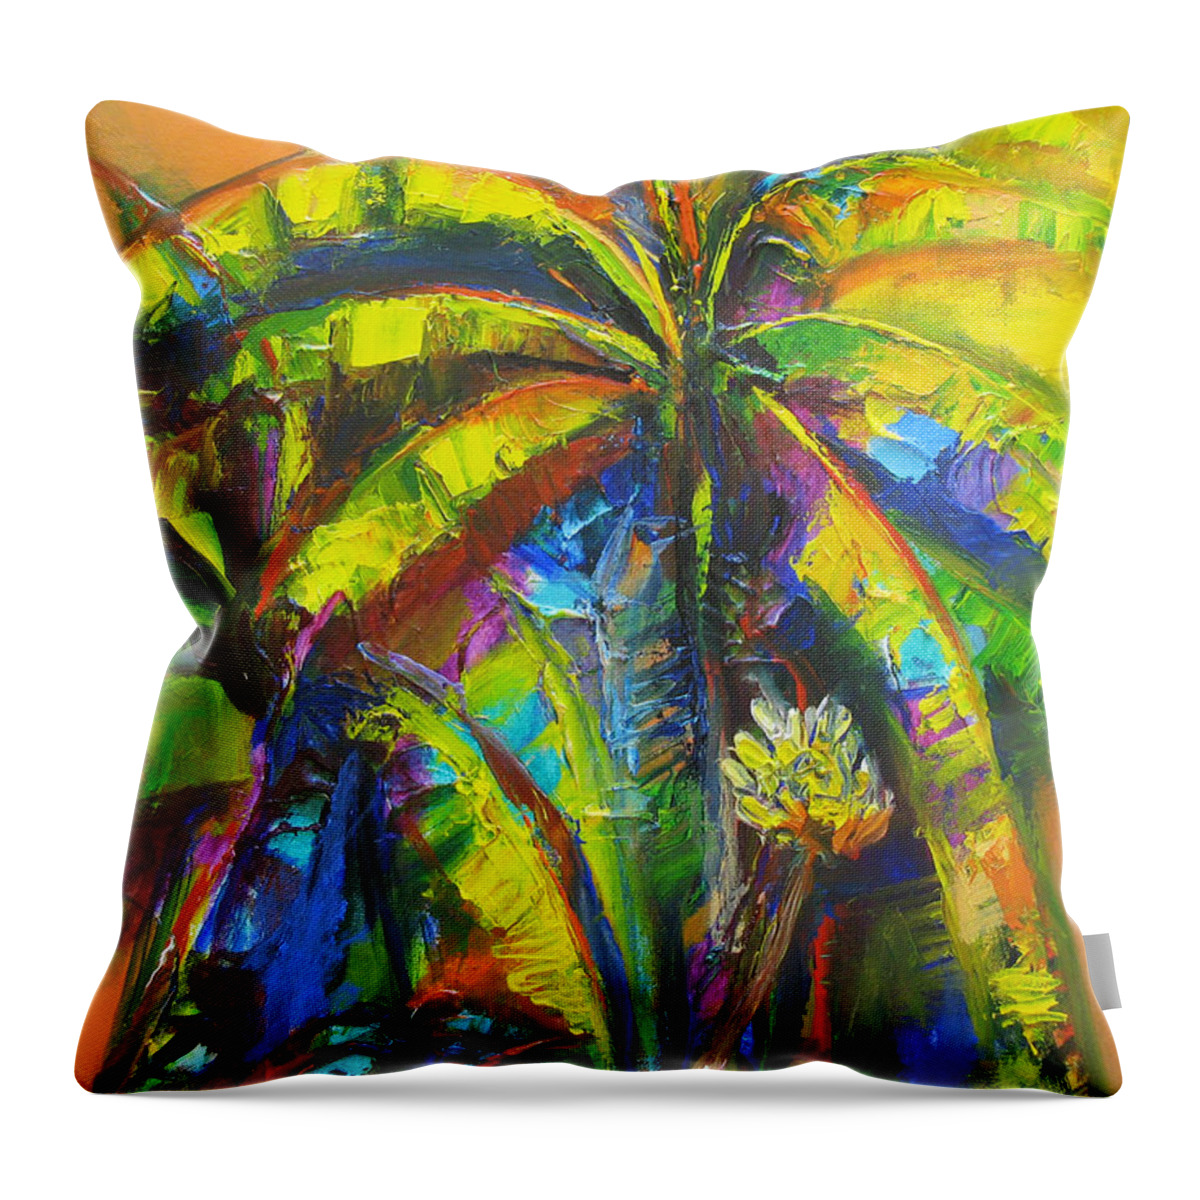 Banana Throw Pillow featuring the painting Bannana Tree by Cynthia McLean